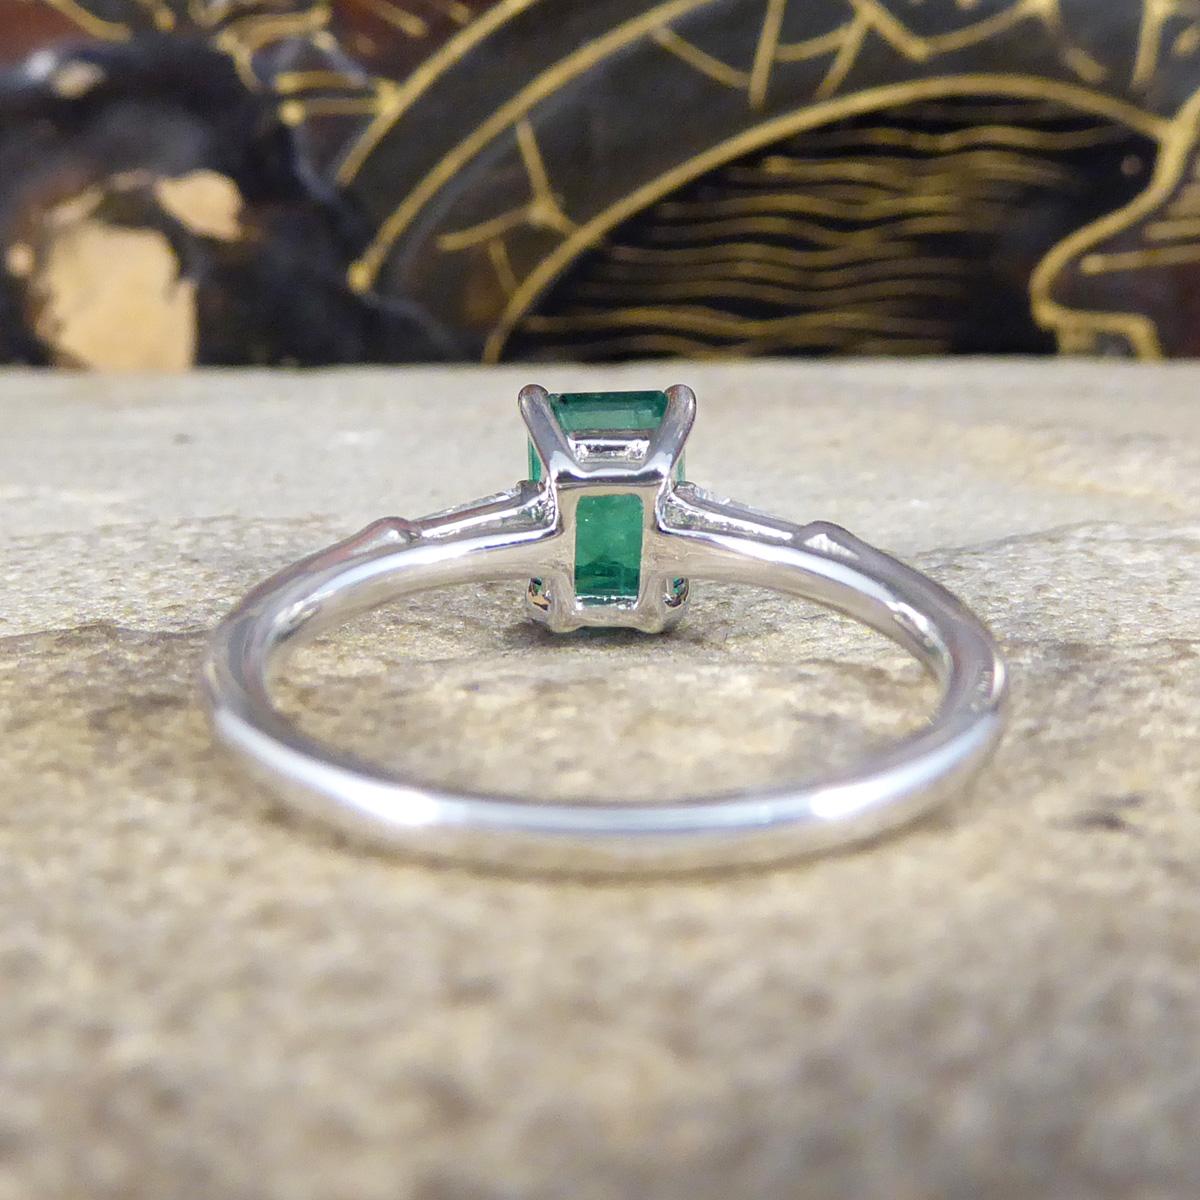 Modern 1.03ct Emerald Cut Emerald Ring with Baguette Cut Diamond Shoulders in Platinum